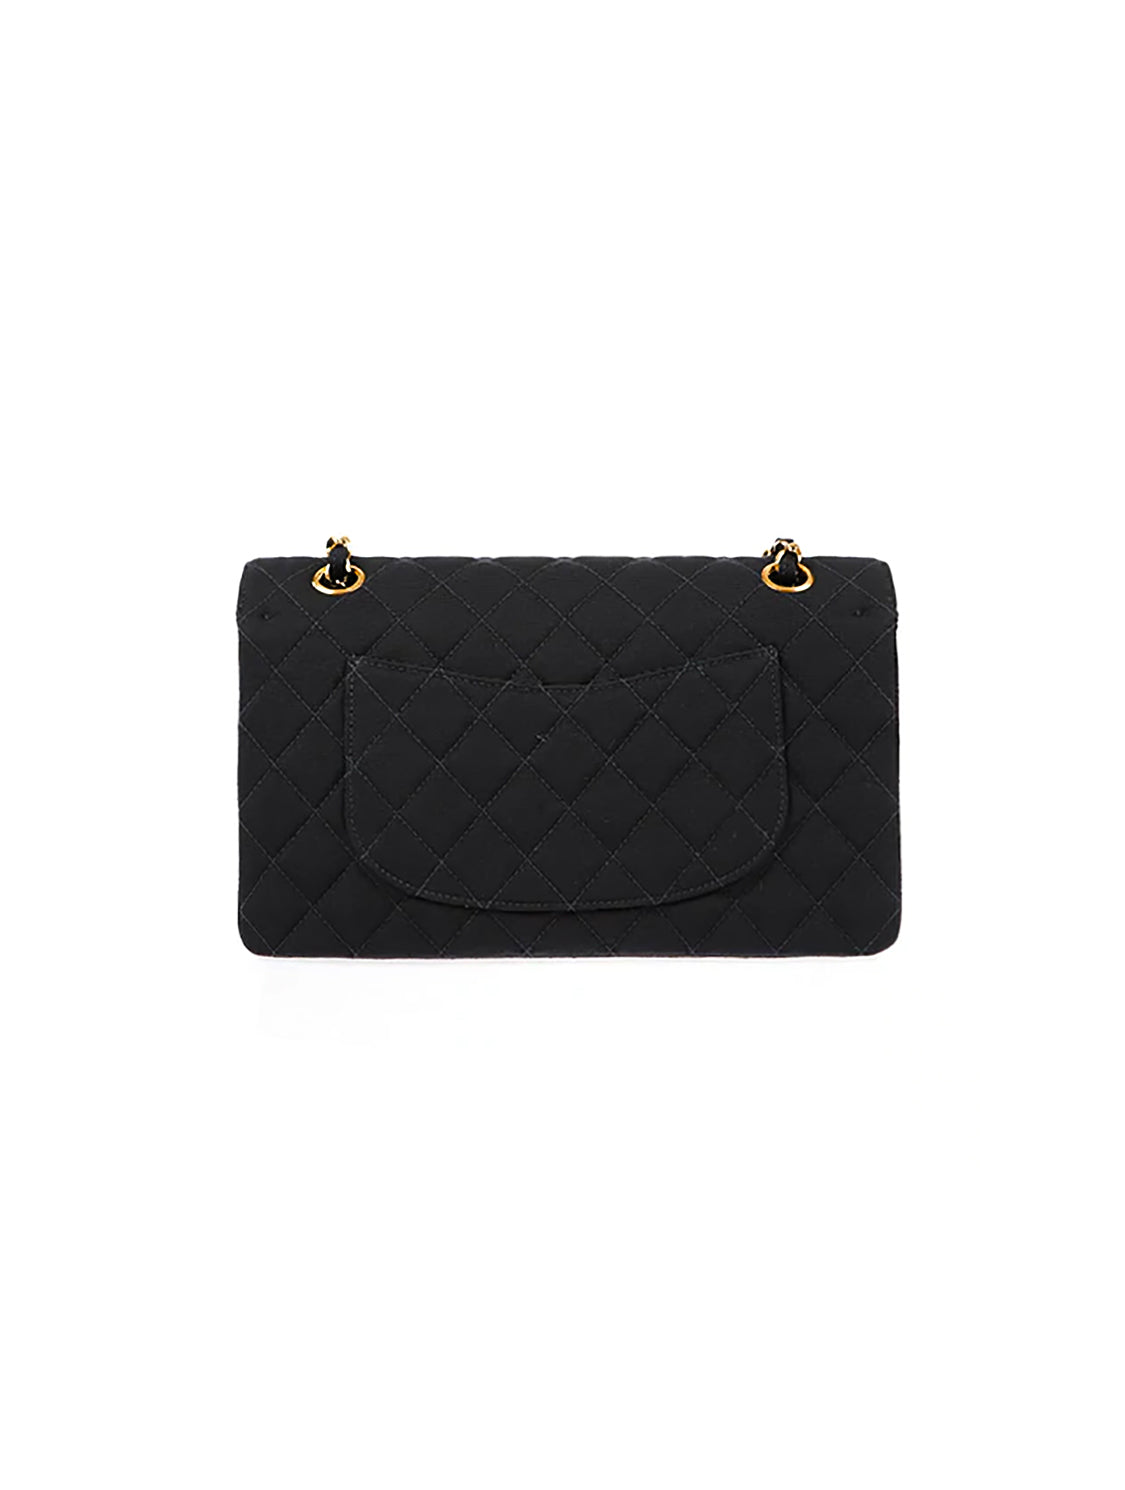 Chanel 2000s Black Cloth Leather Flap Bag